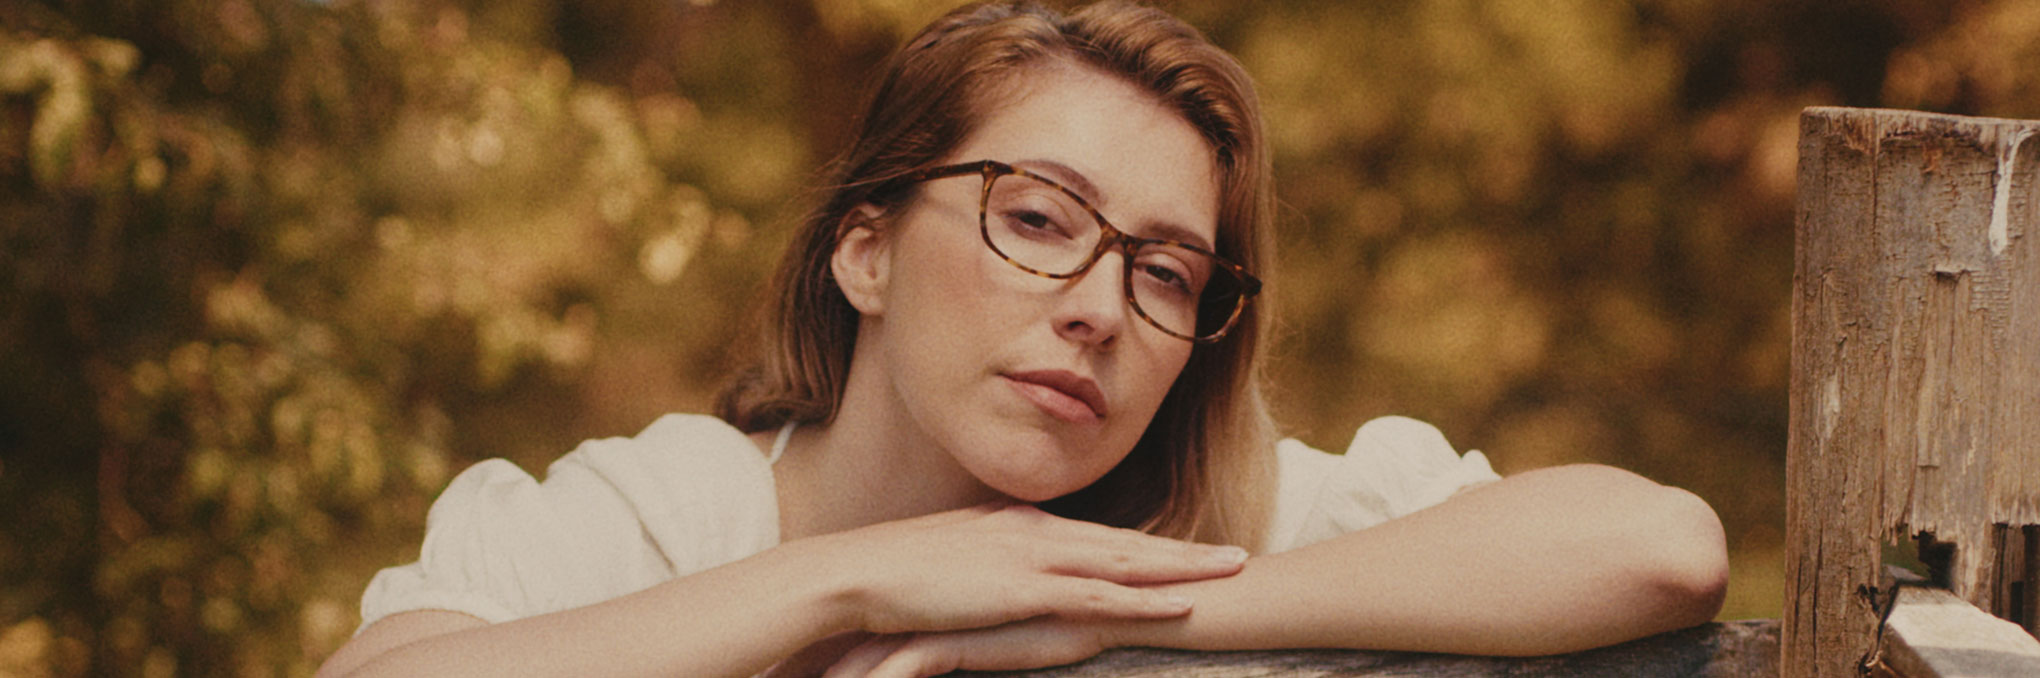 Model wearing glasses